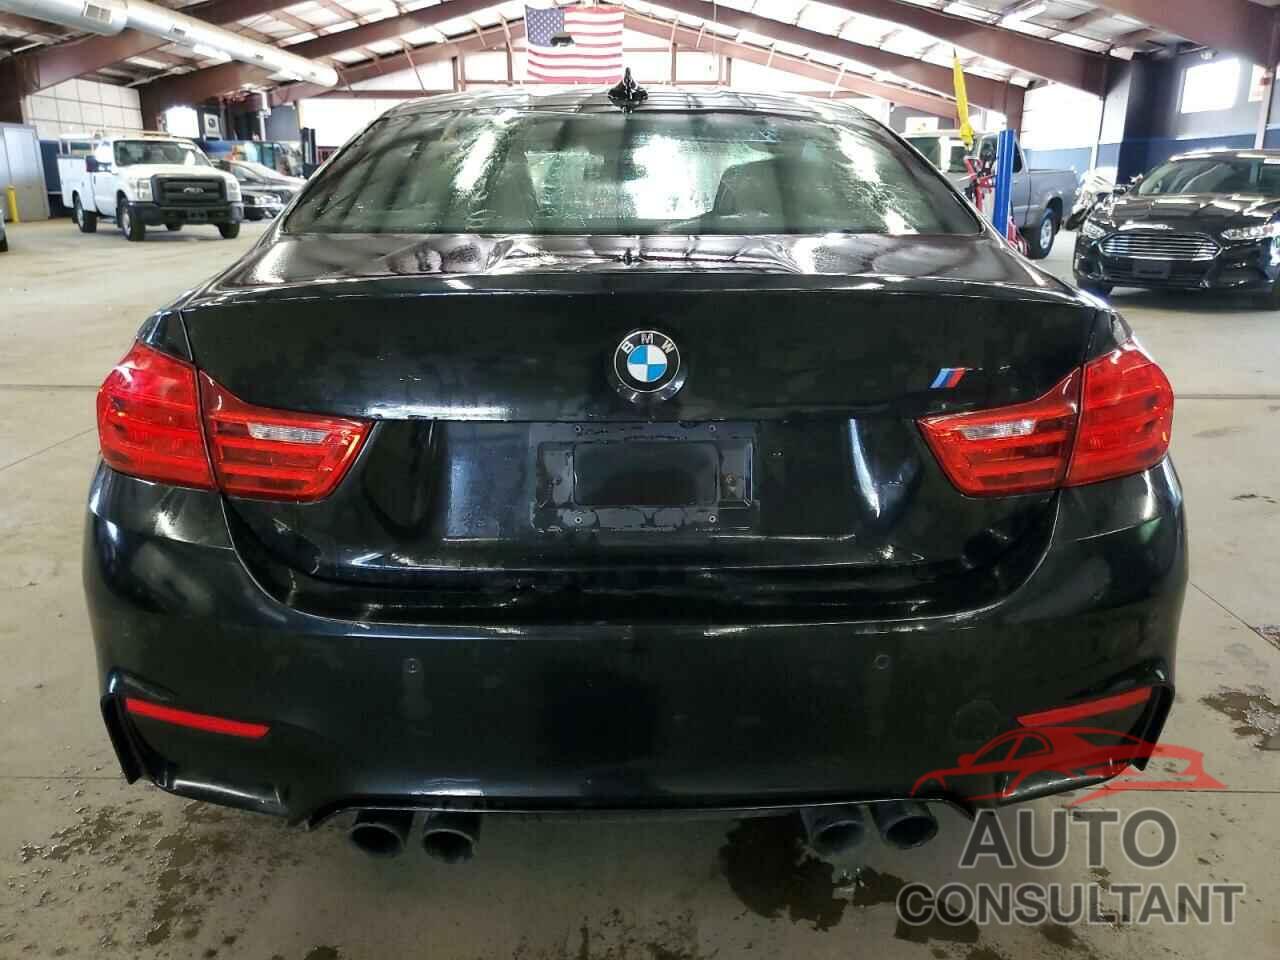 BMW M4 2017 - WBS3R9C51HK709625